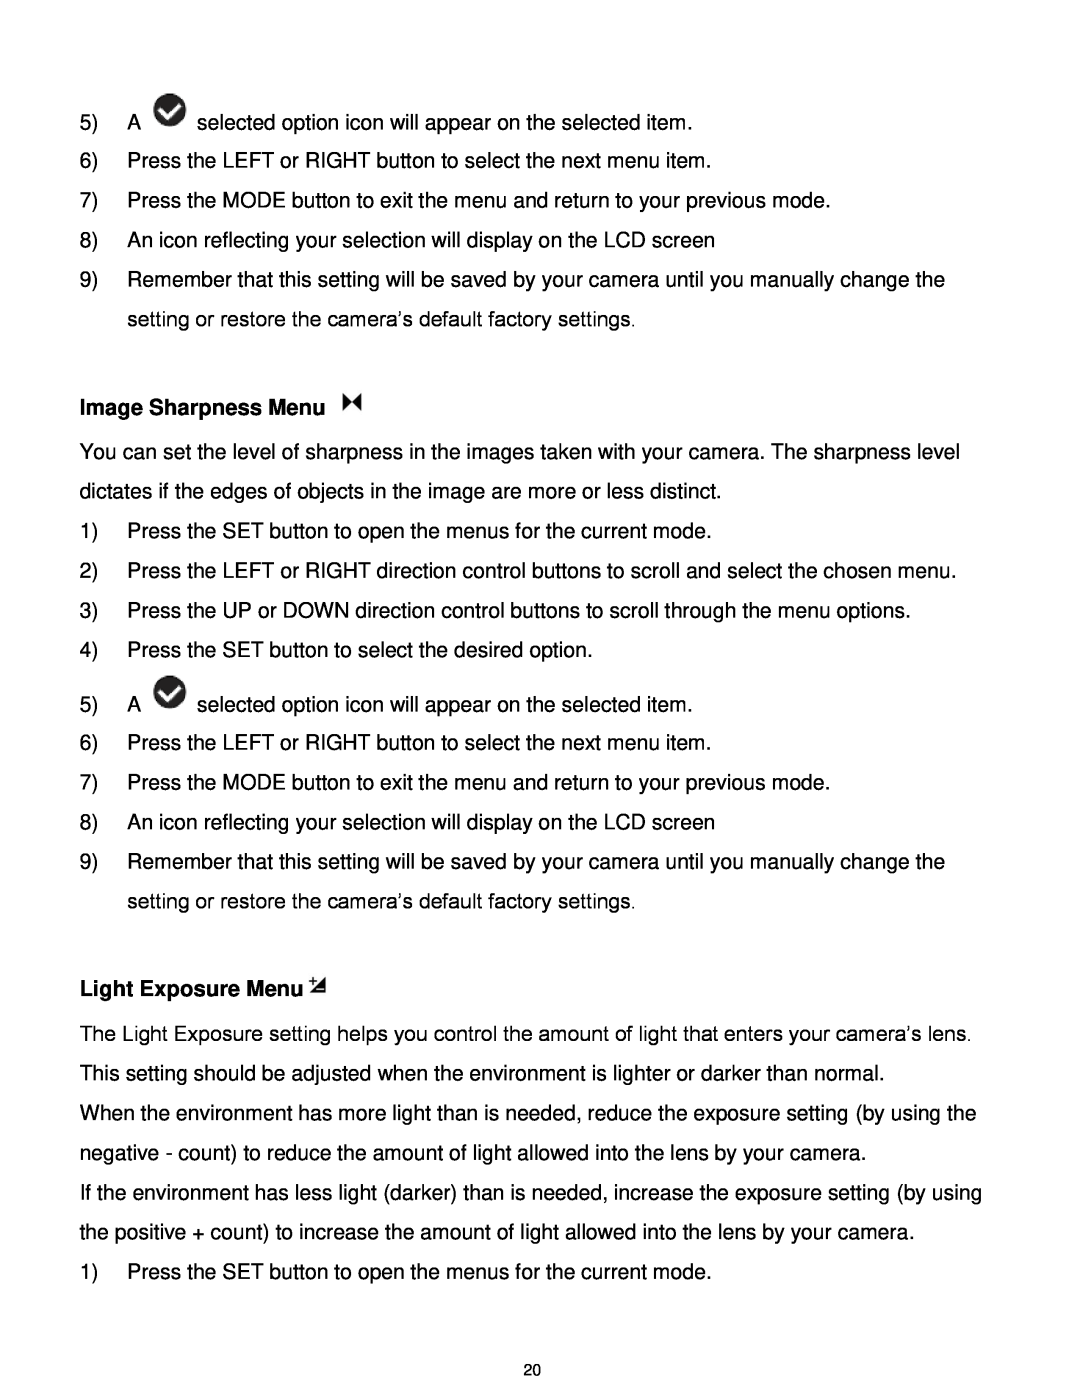 Vivitar T327 user manual Image Sharpness Menu, Light Exposure Menu 